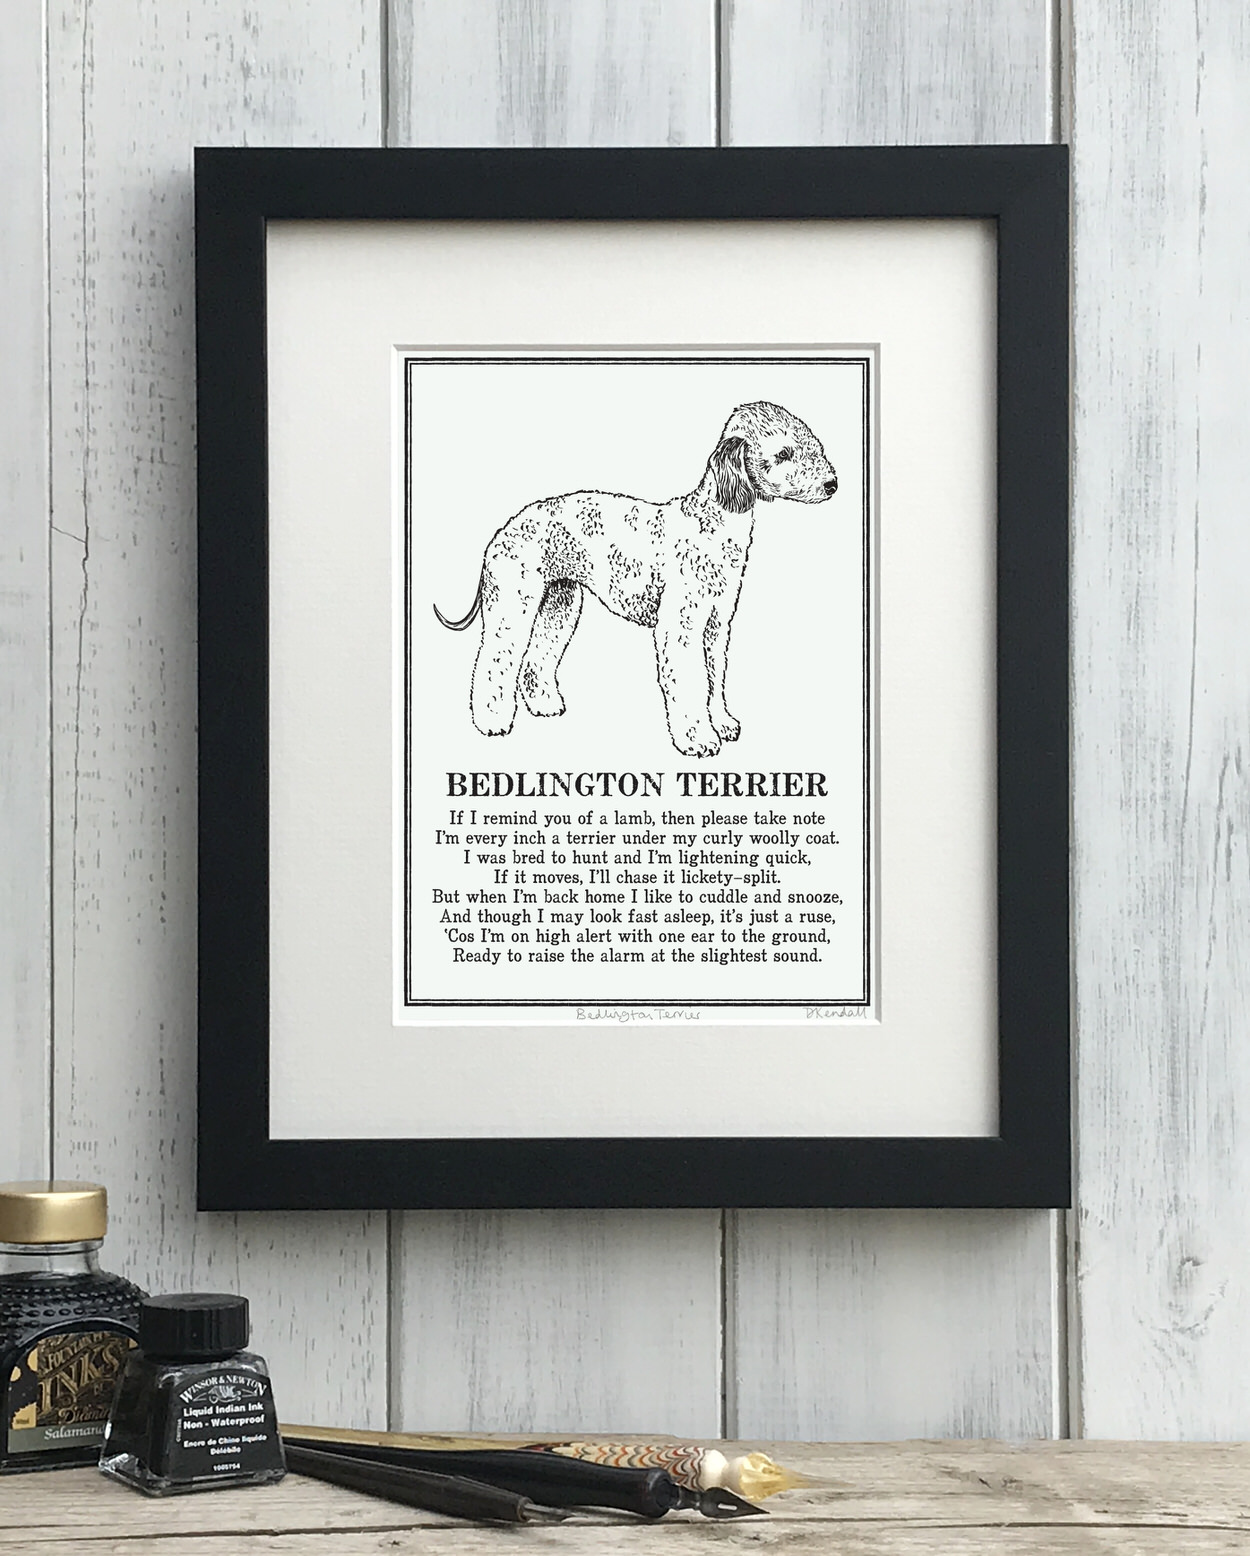 Bedlington Terrier Doggerel Illustrated Poem Art Print | The Enlightened Hound